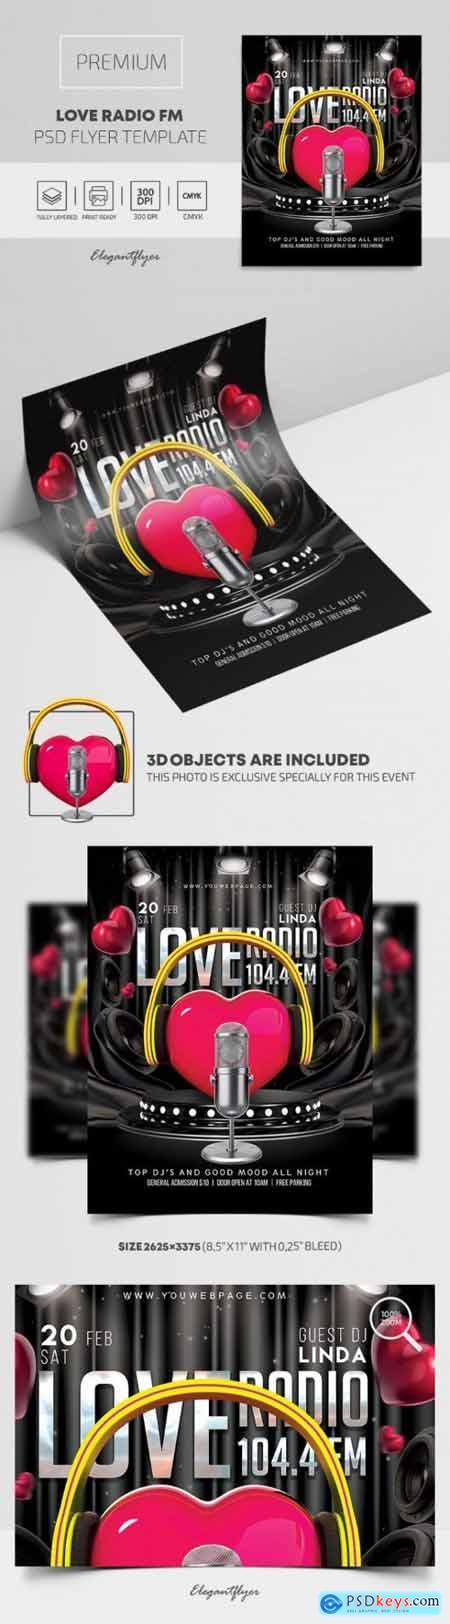 Love Radio FM – Premium PSD Flyer Template